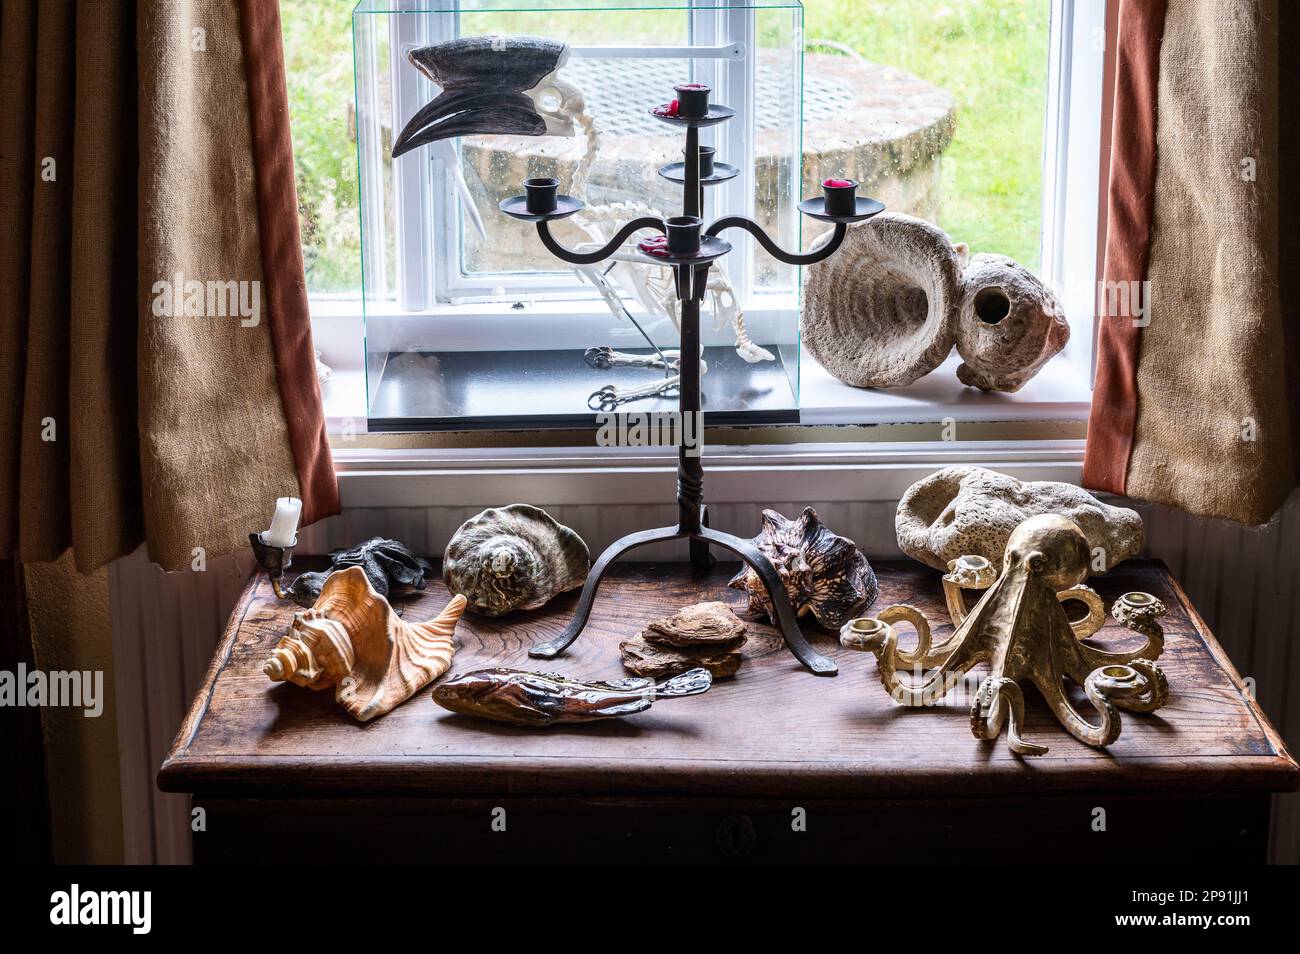 Seashells and candlestick on table in window of 16th century Tudor farmhouse, Suffolk, UK. Stock Photo